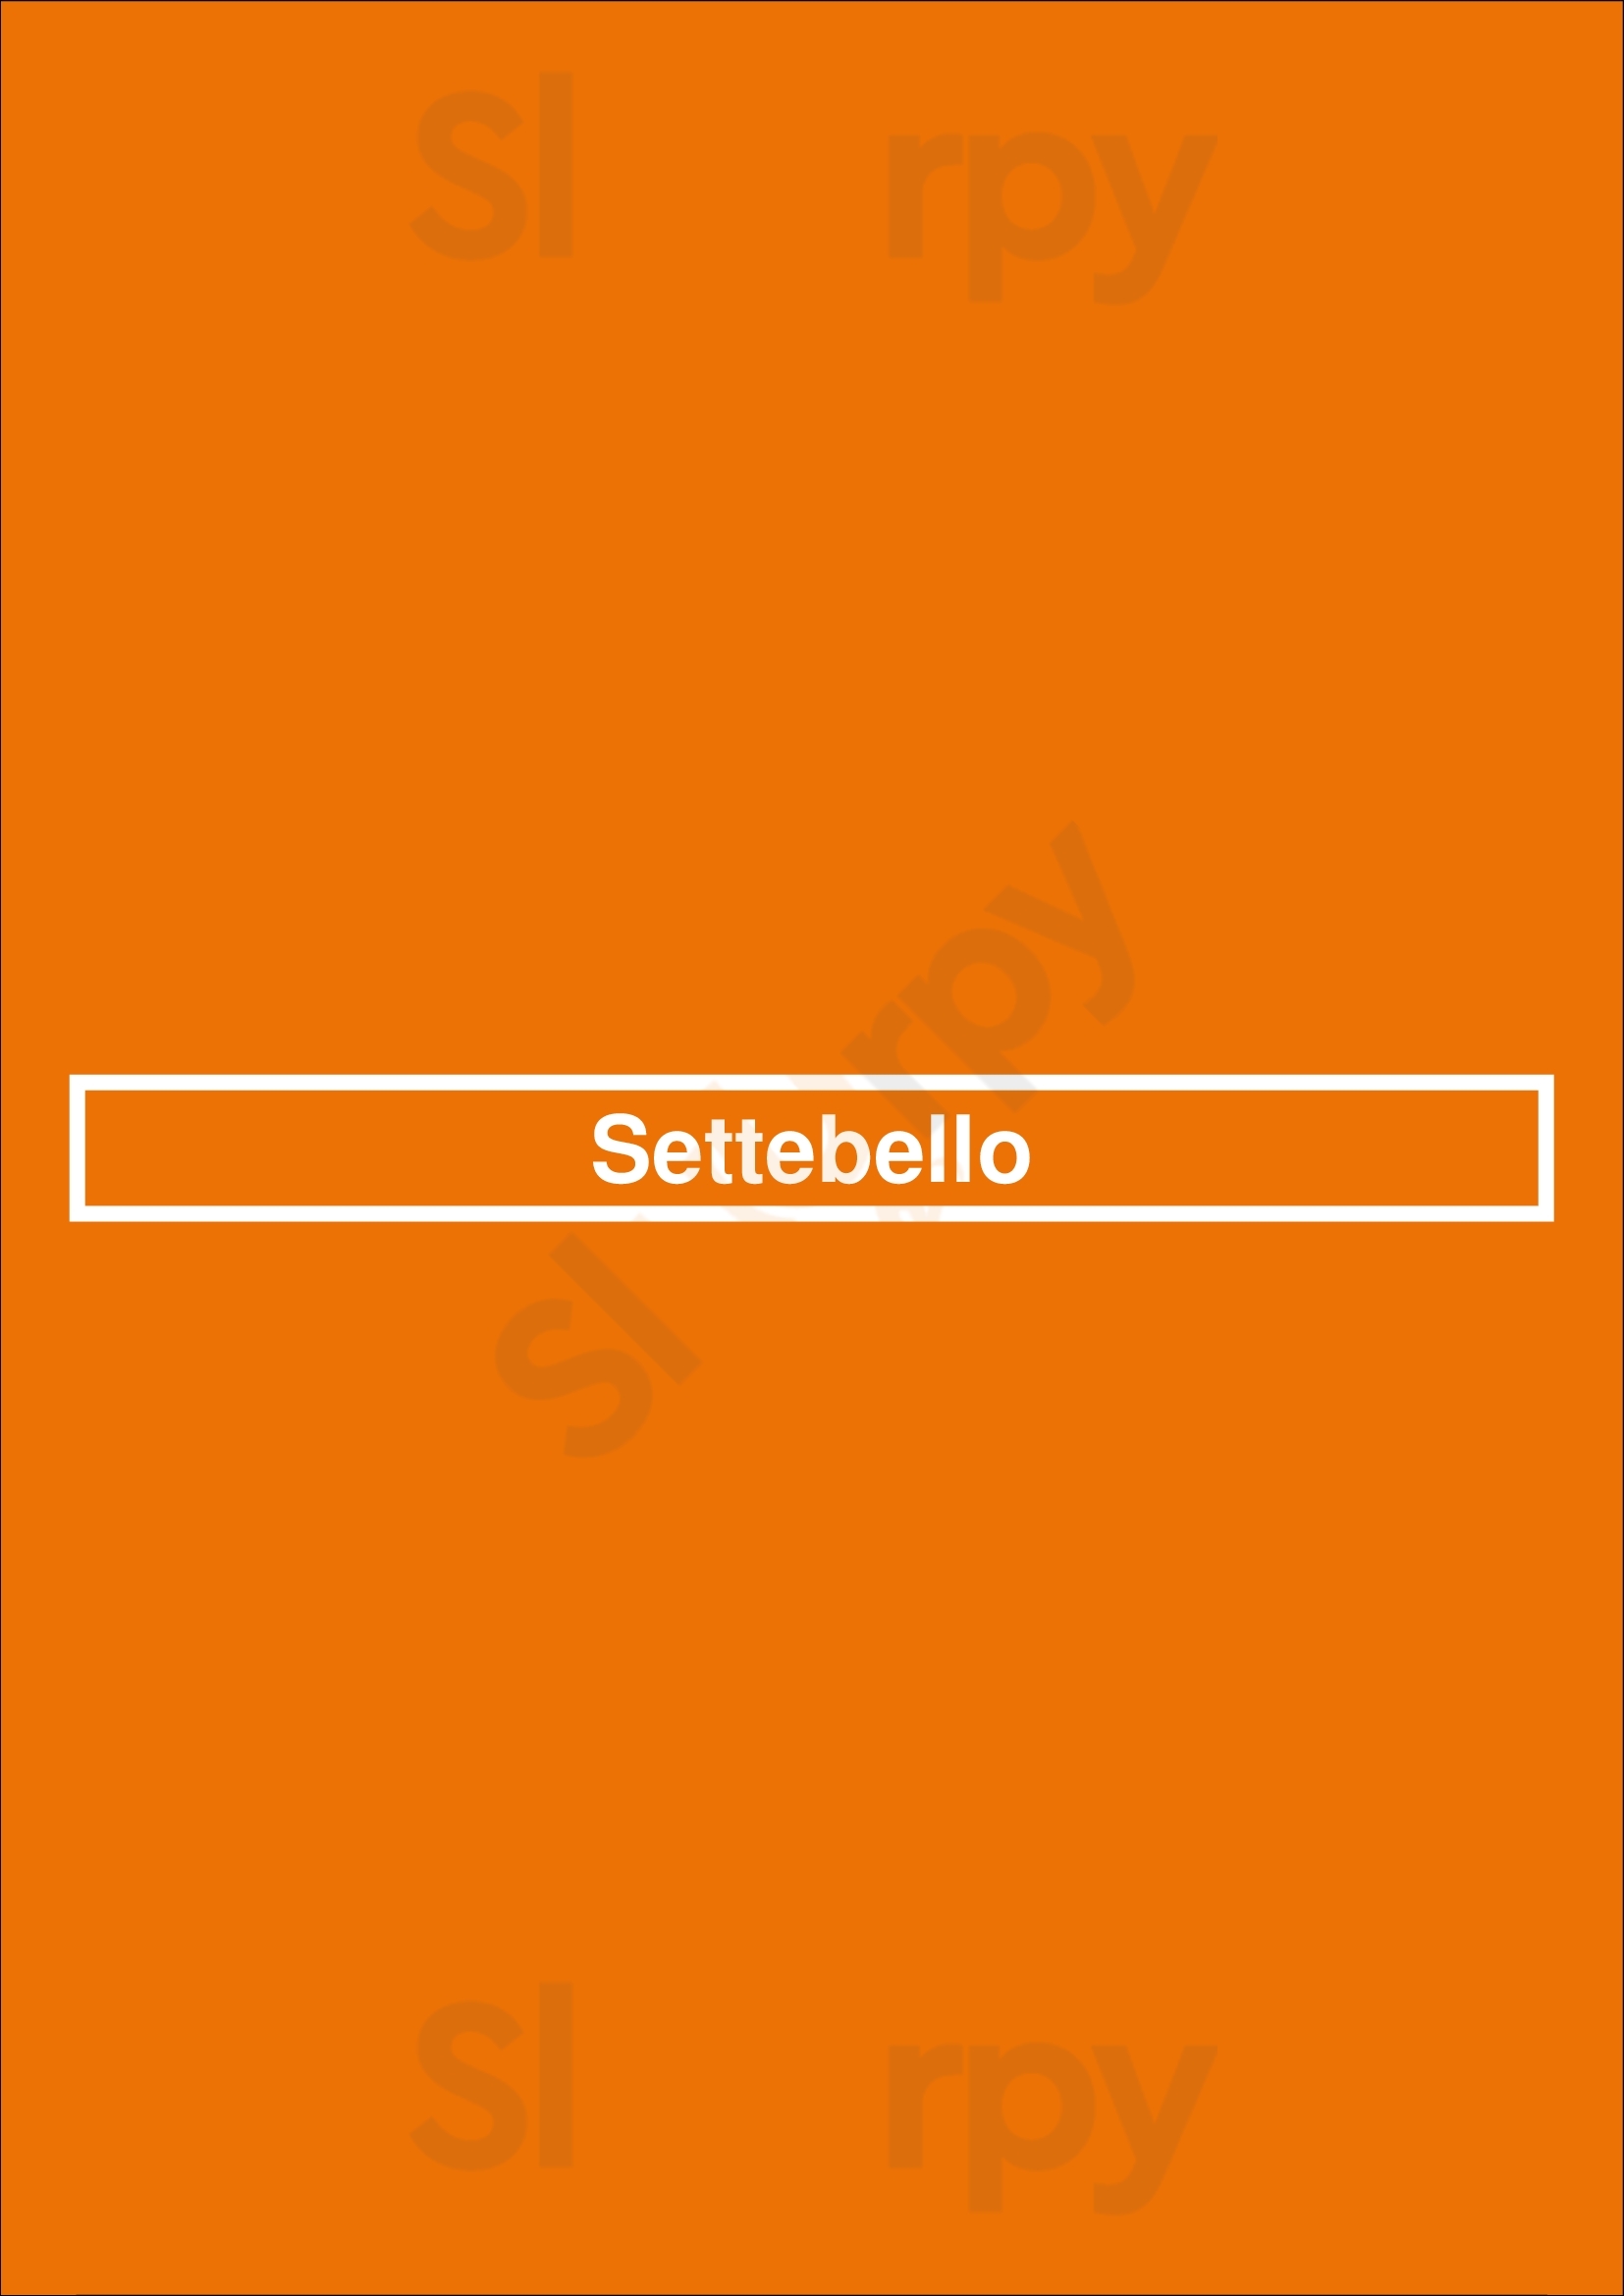 Settebello Paris Menu - 1